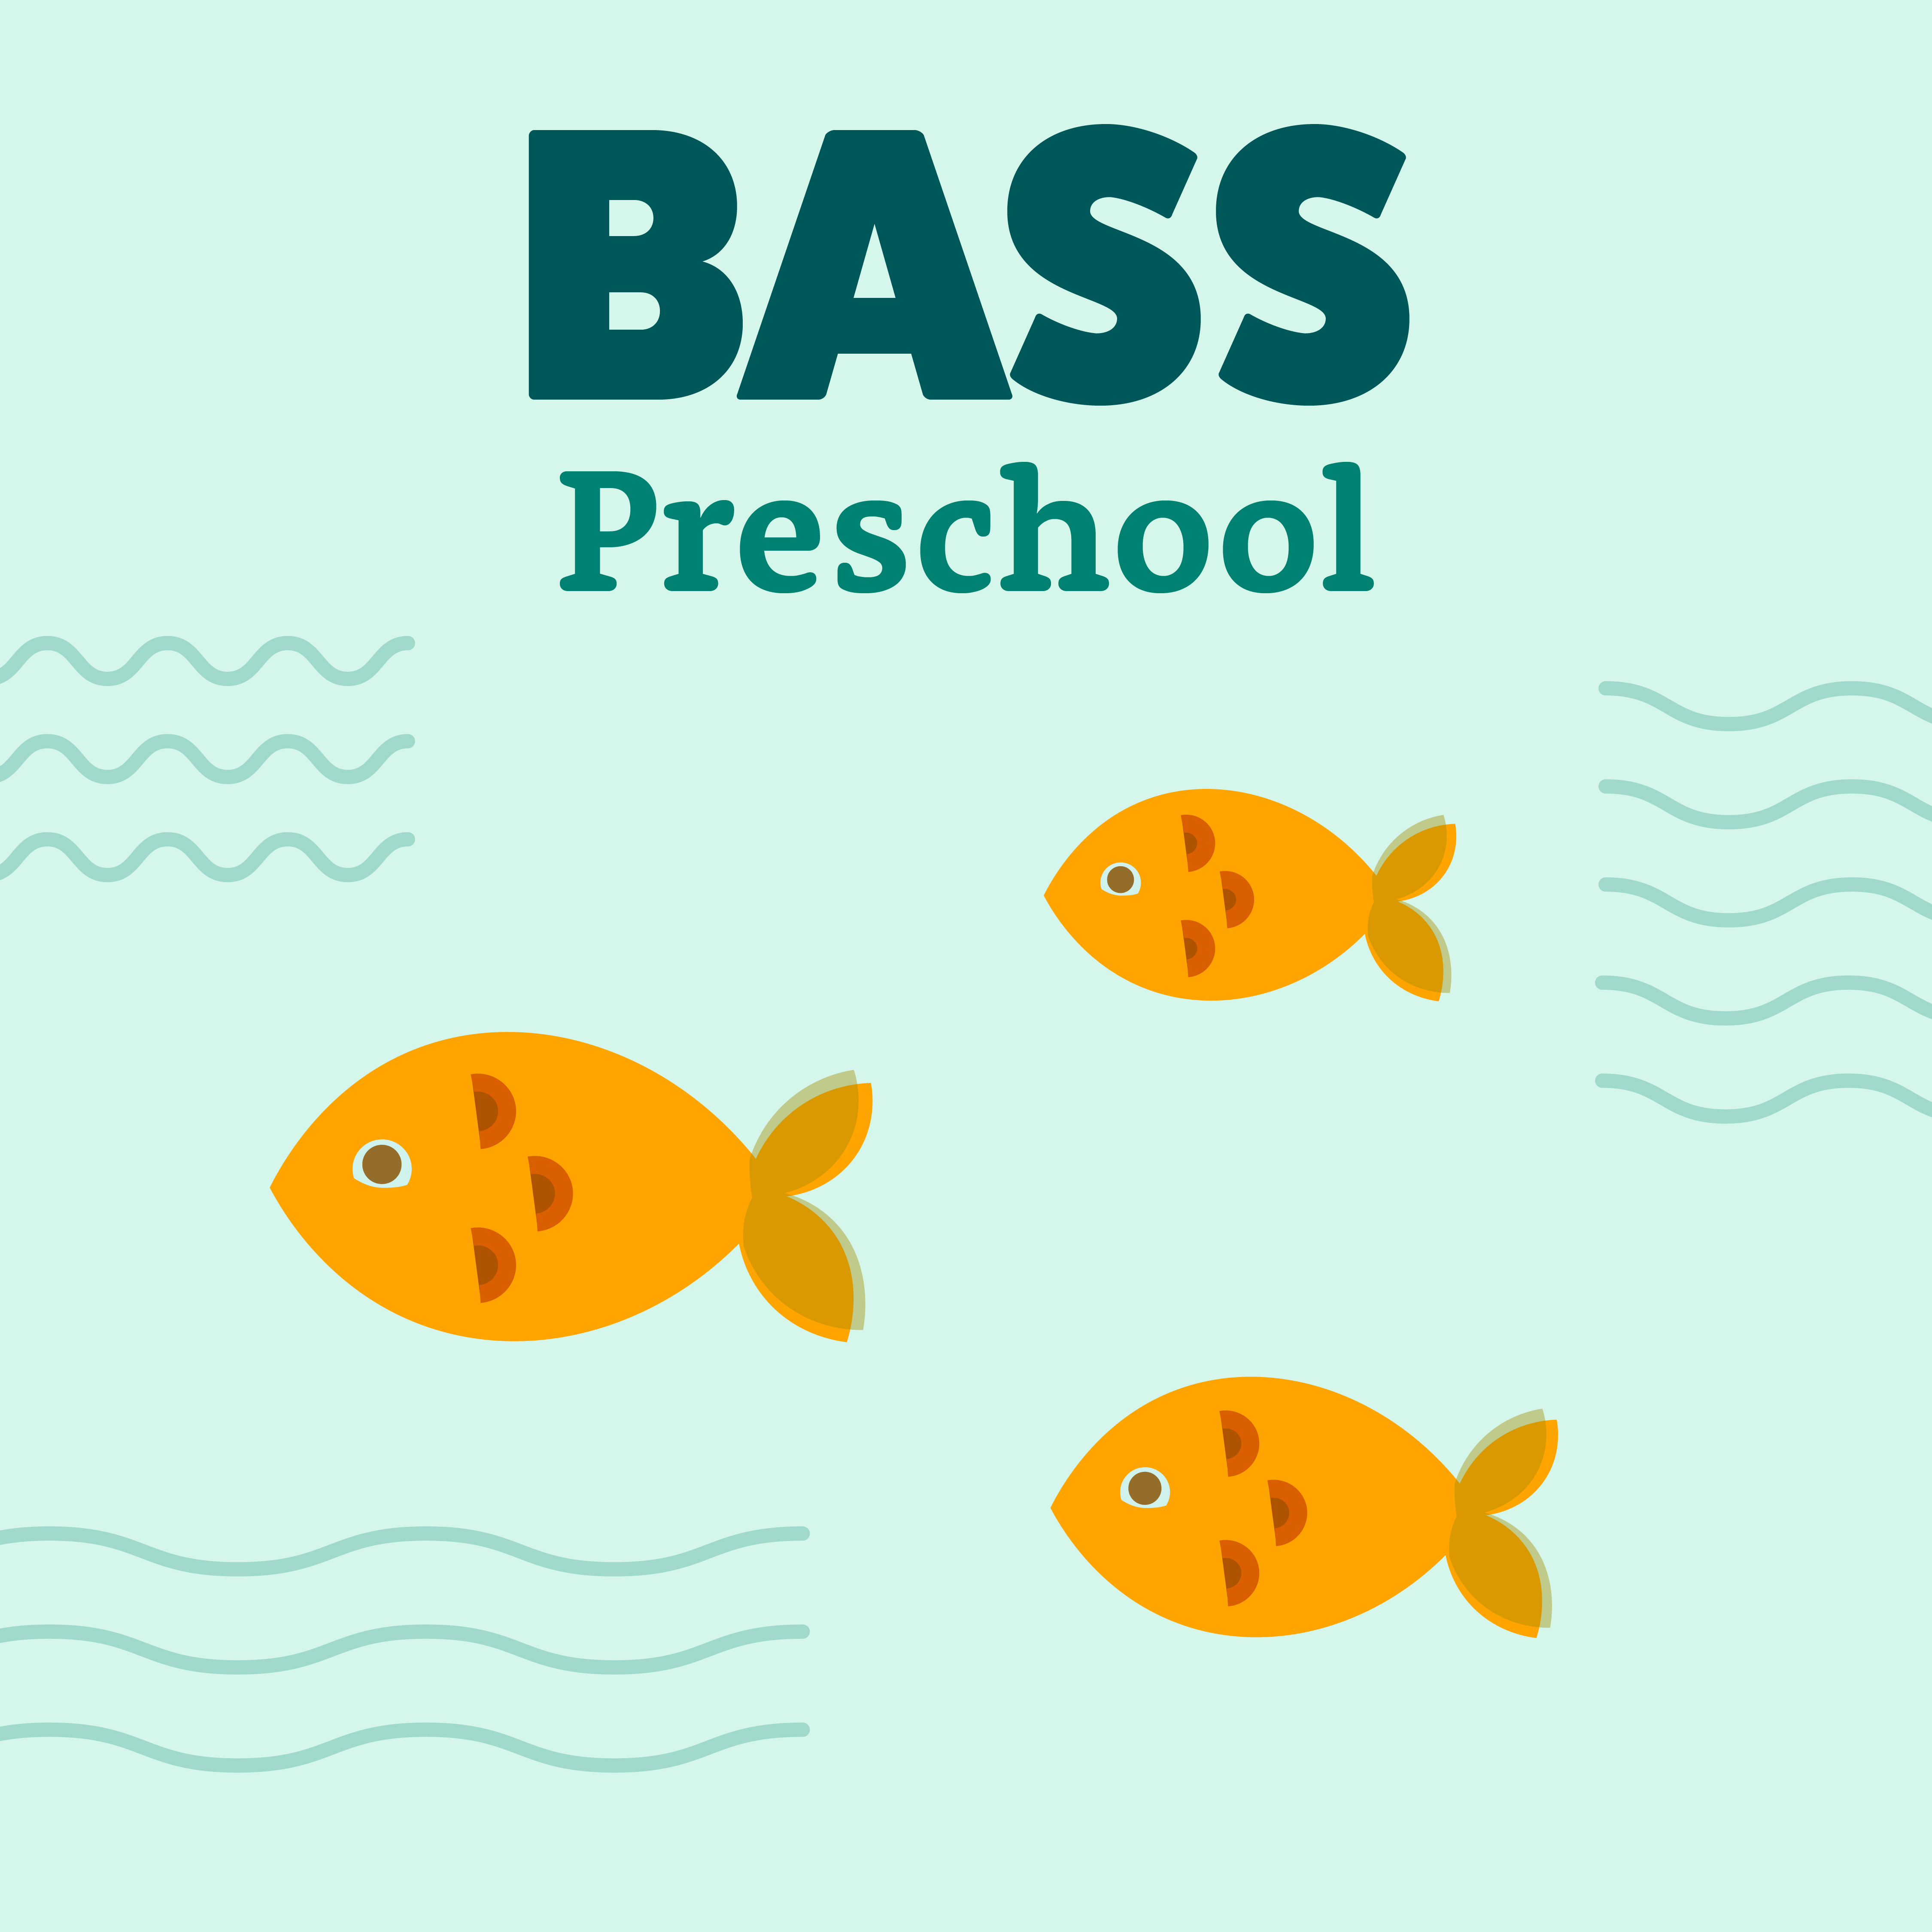 Illustration of three fish with text "Bass Preschool"